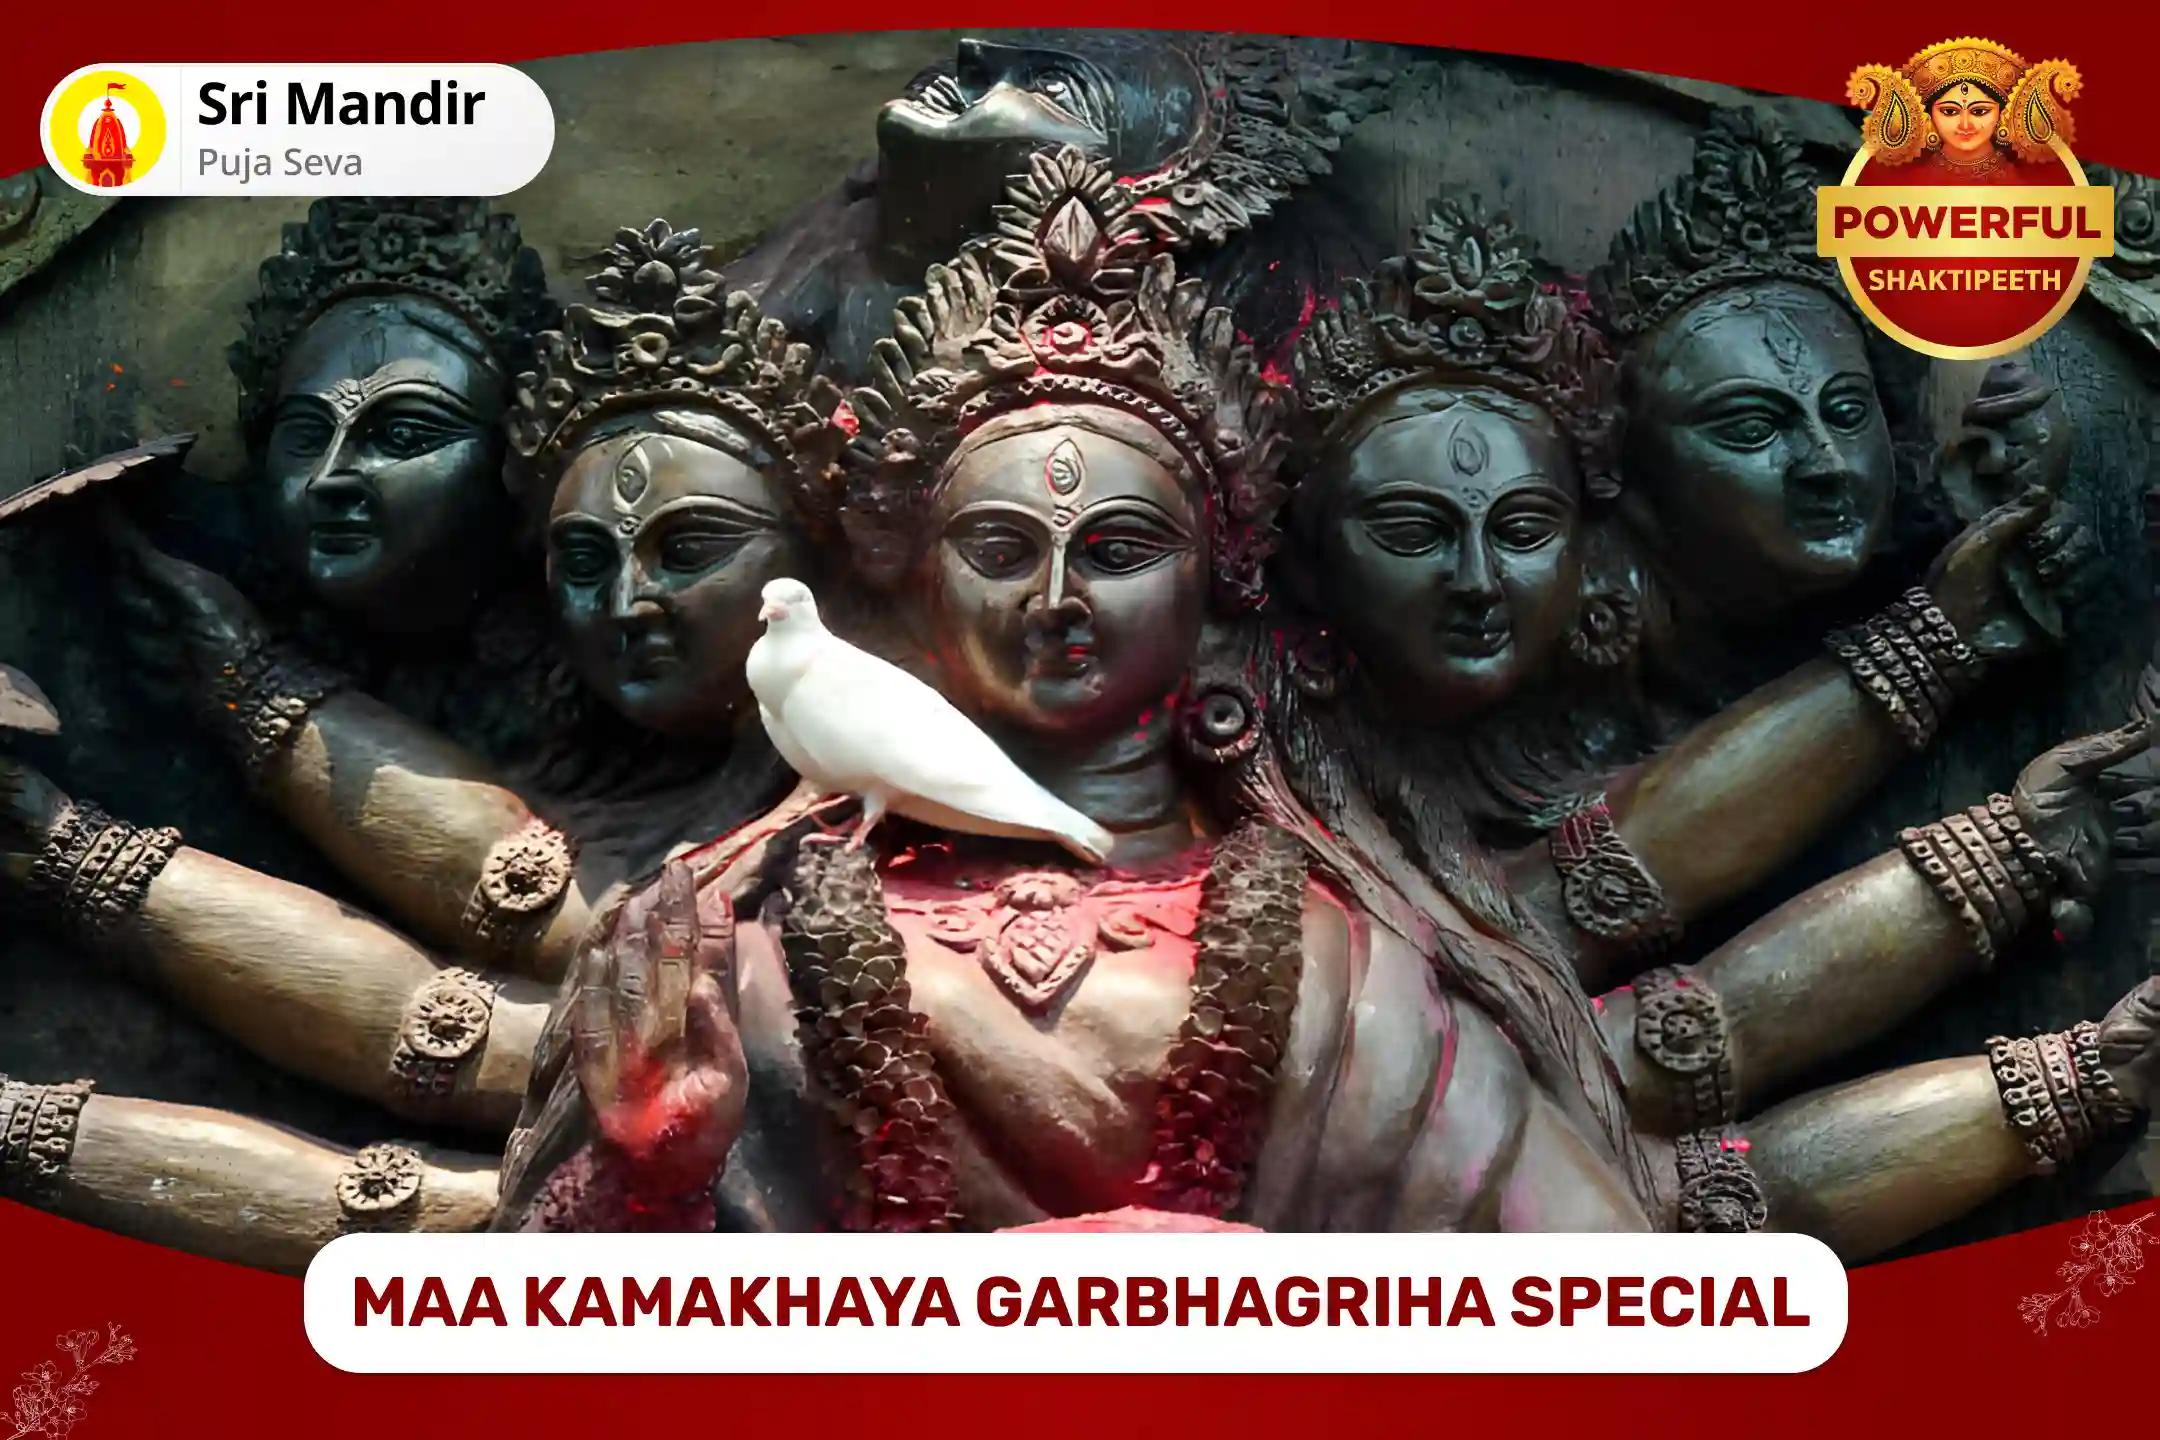 Shaktipeeth Kamakhya Special Maa Kamakhya Siddhi Yagya For Attaining Mental and Physical Strength